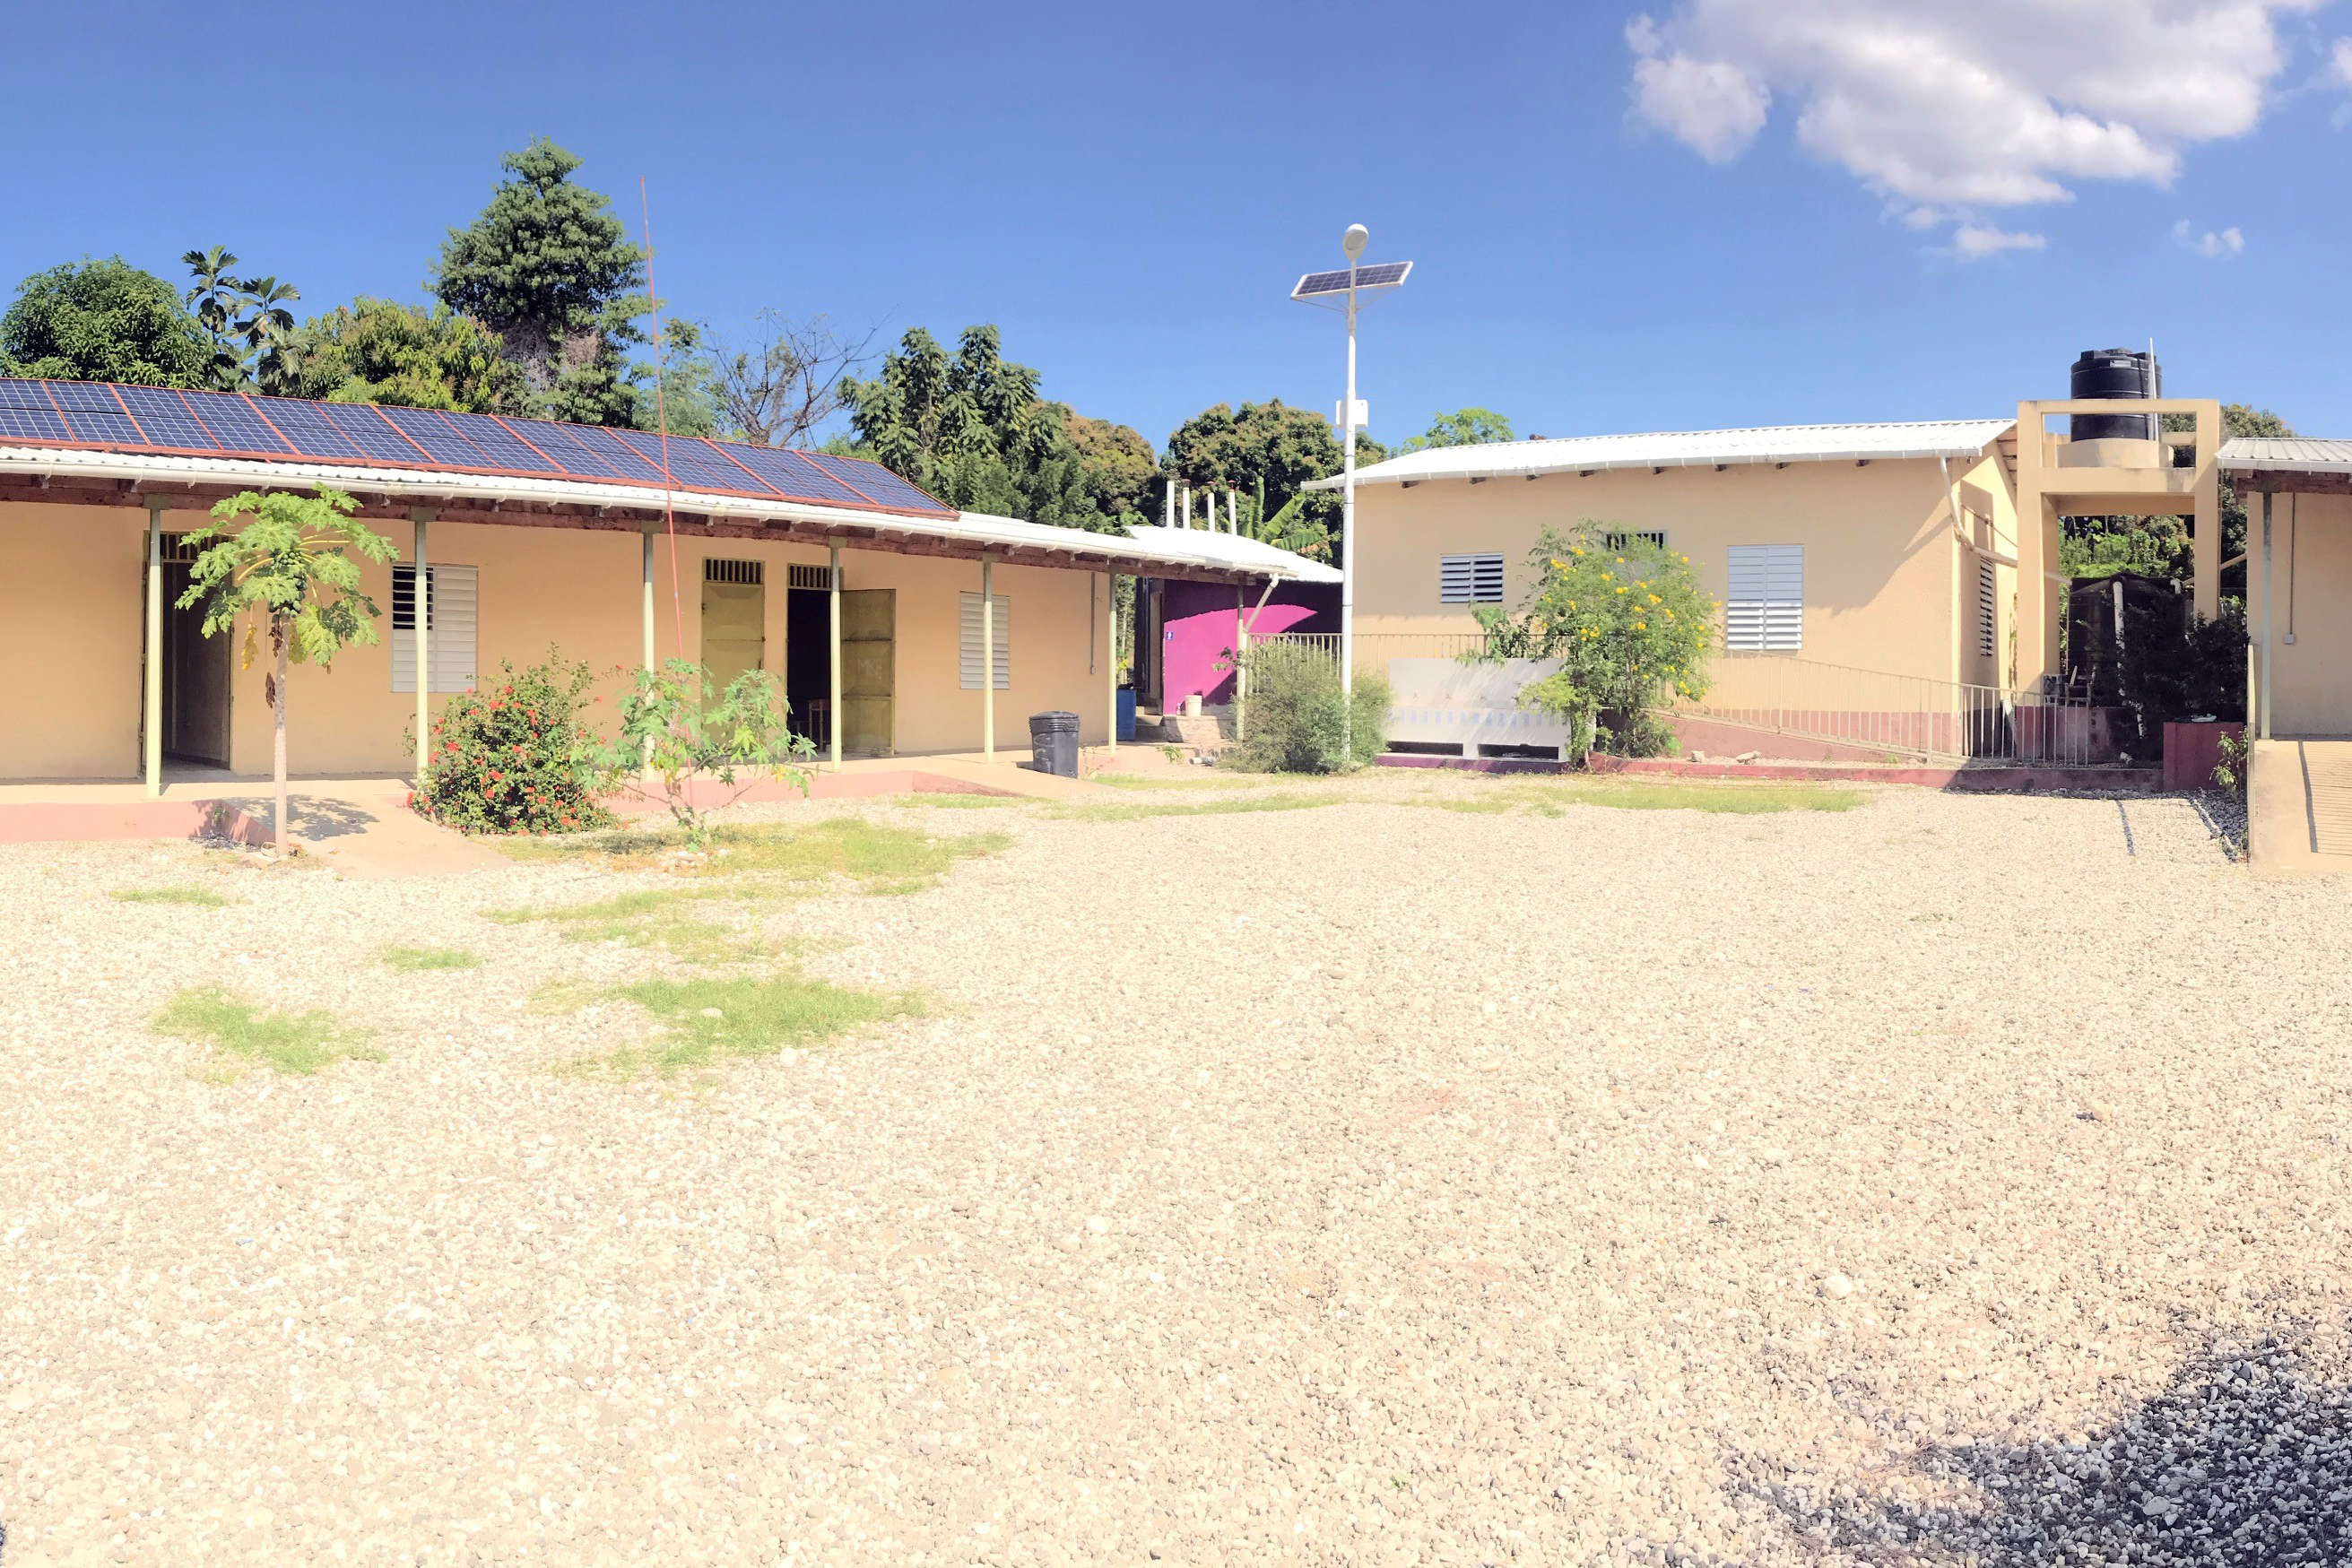 One of the schools in Deslandes.